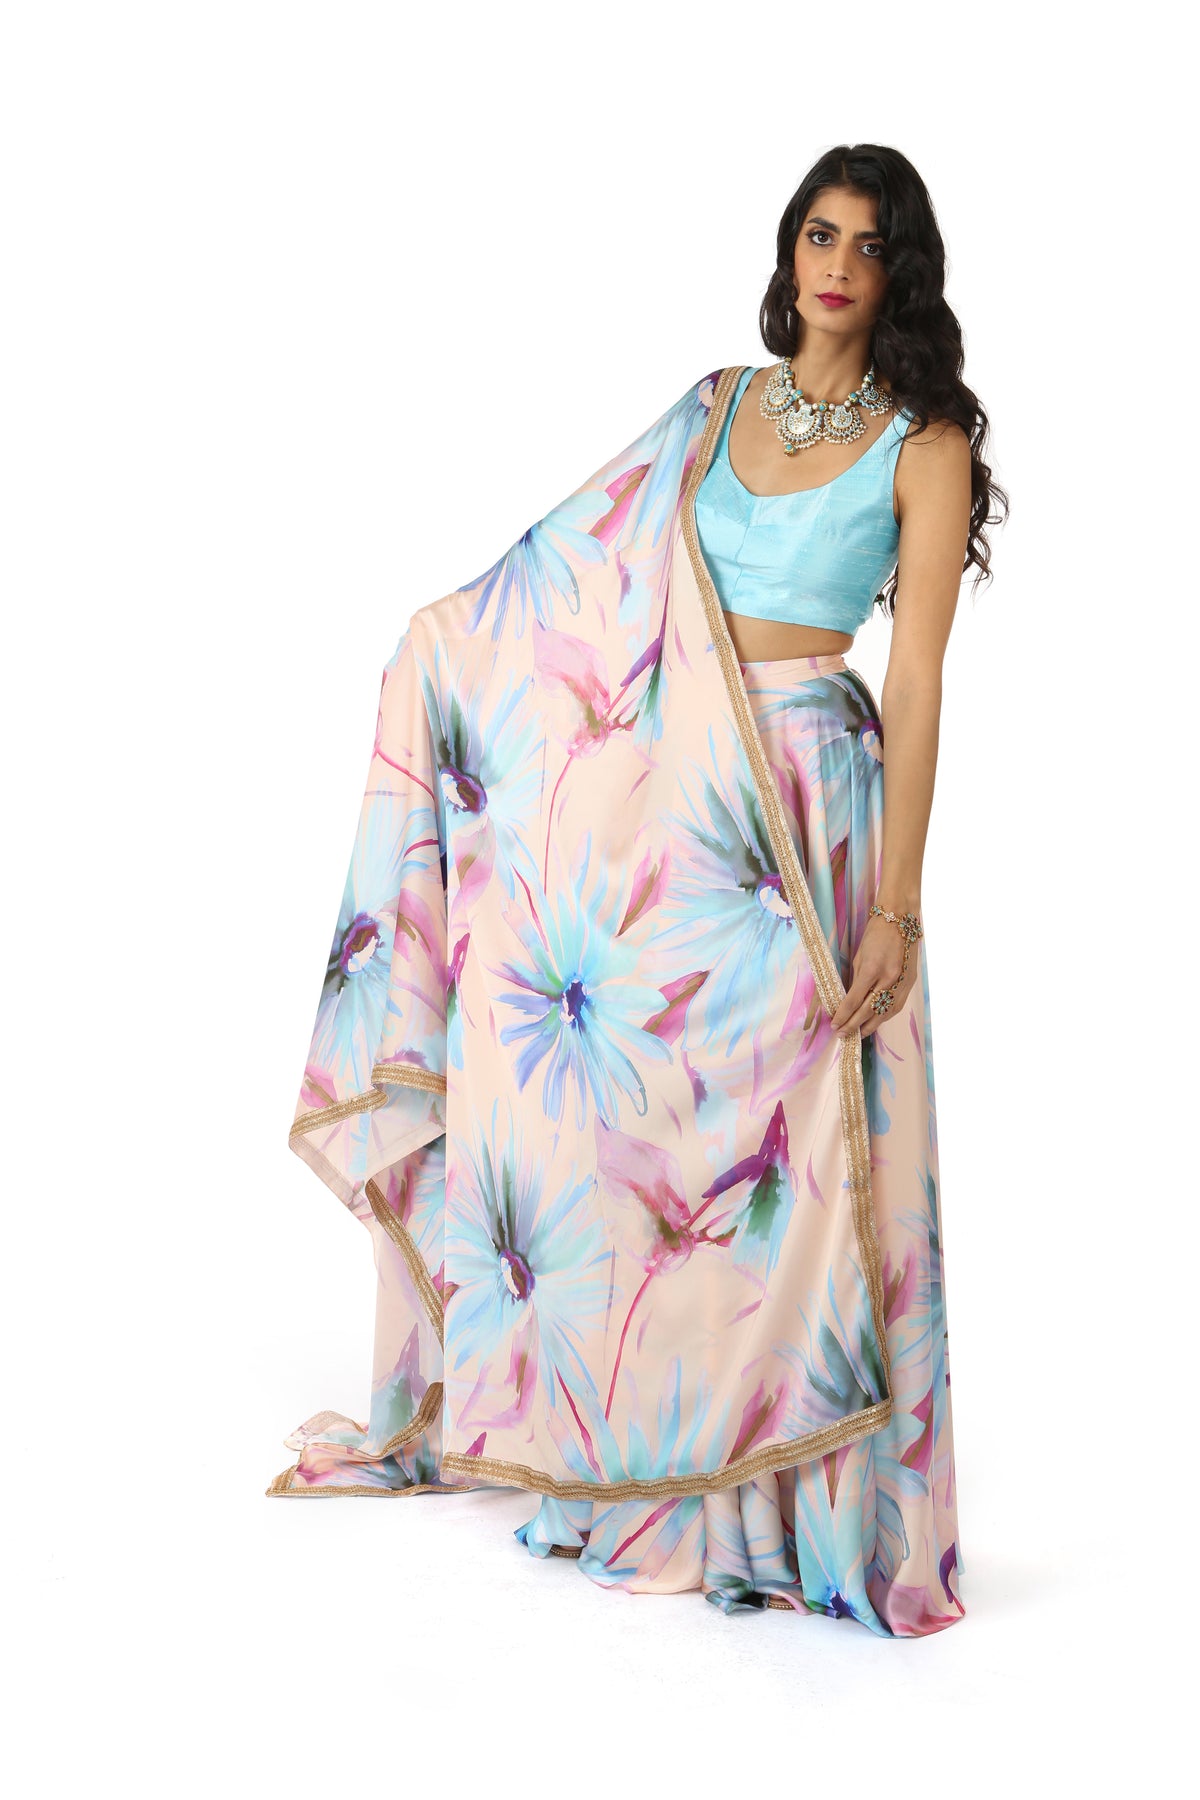 RITA Watercolor Floral Dupatta - Front View - Harleen Kaur - Indian Womenswear